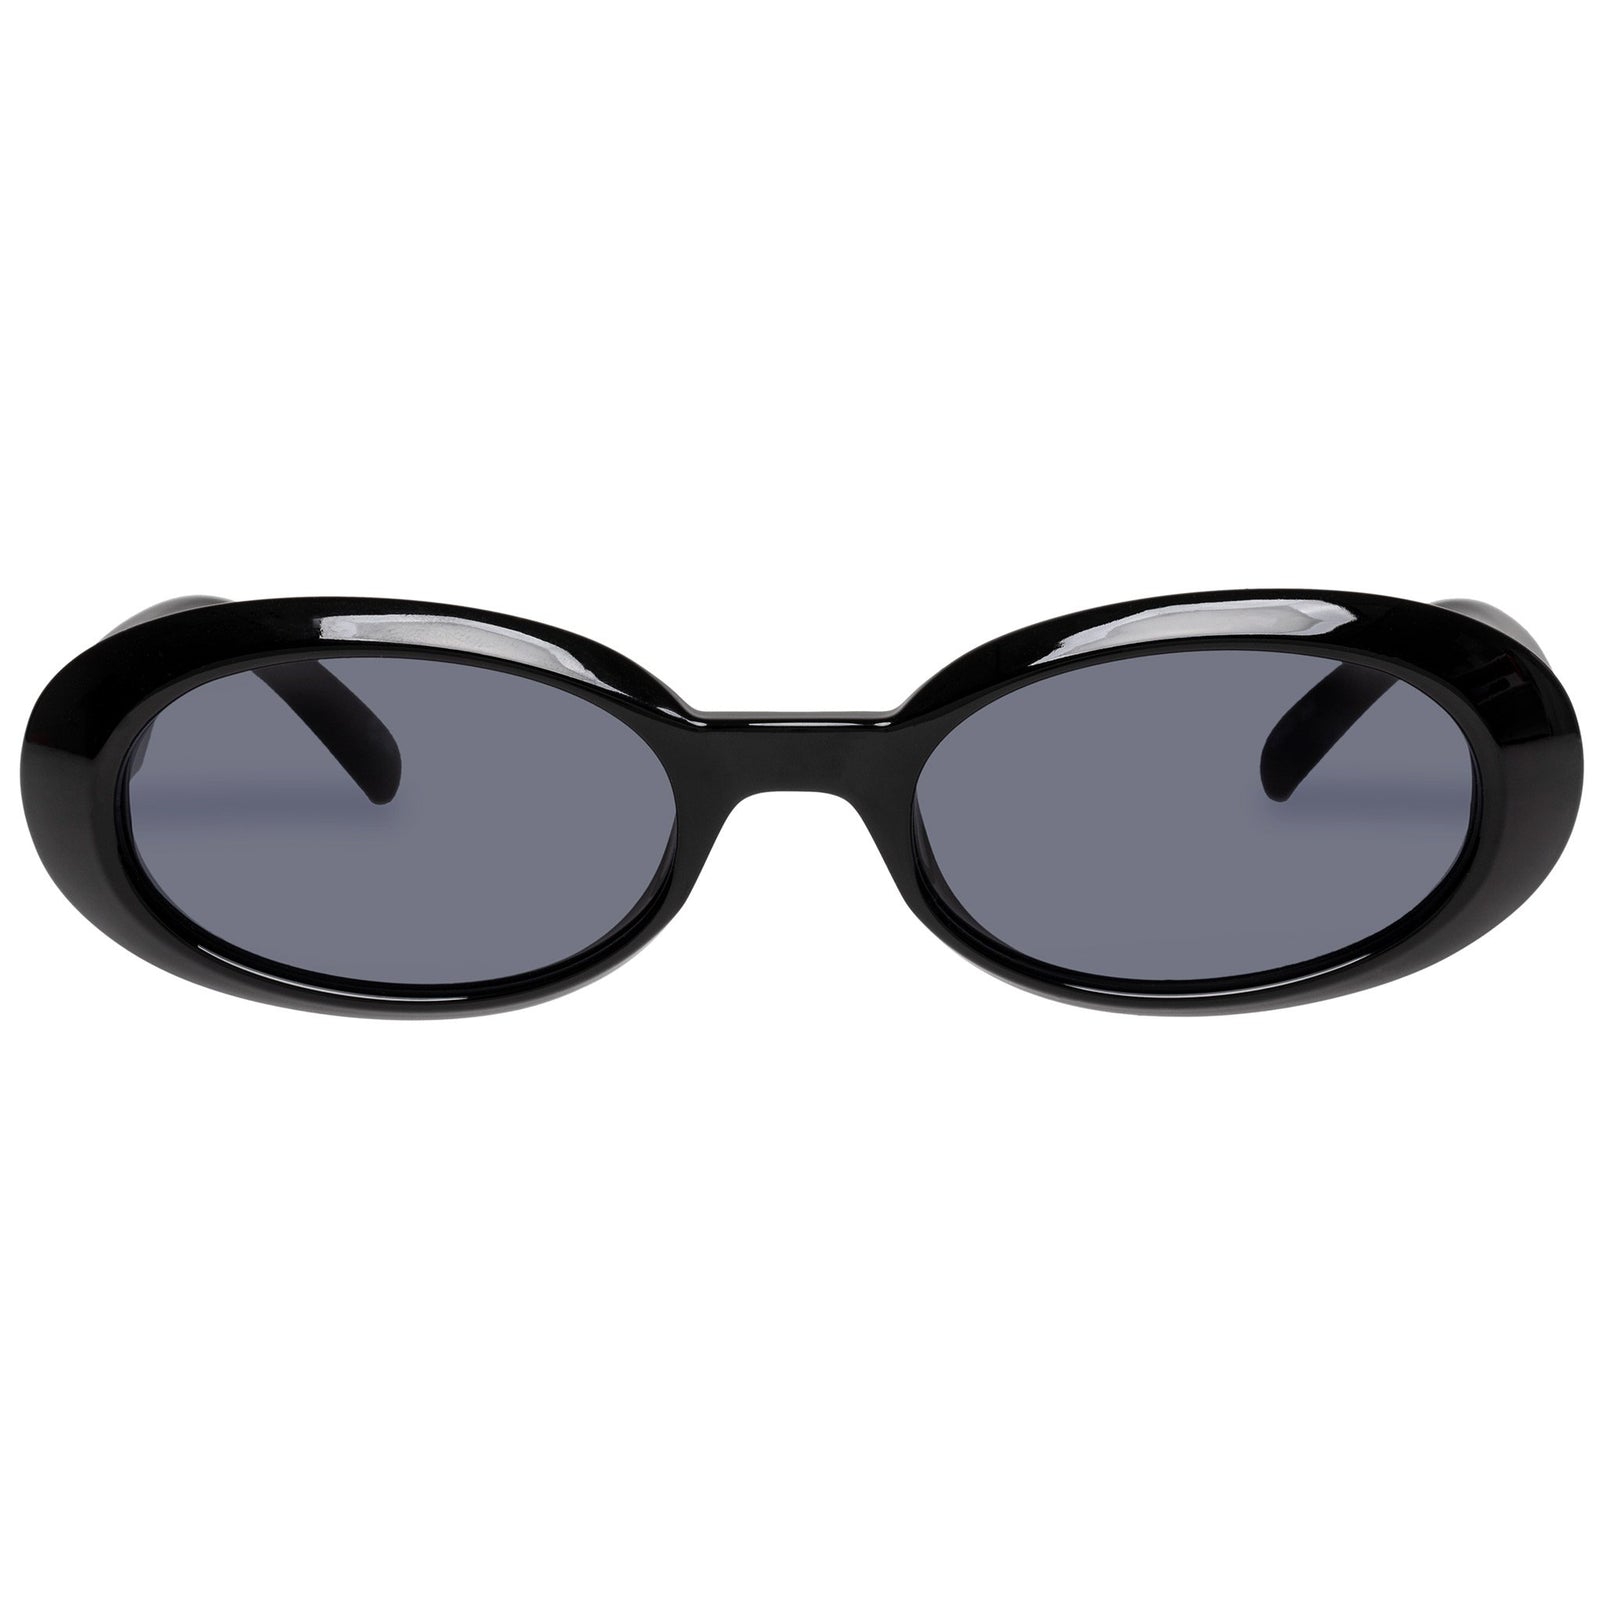 Specs Work It! Uni-Sex Black | Oval Sunglasses Le